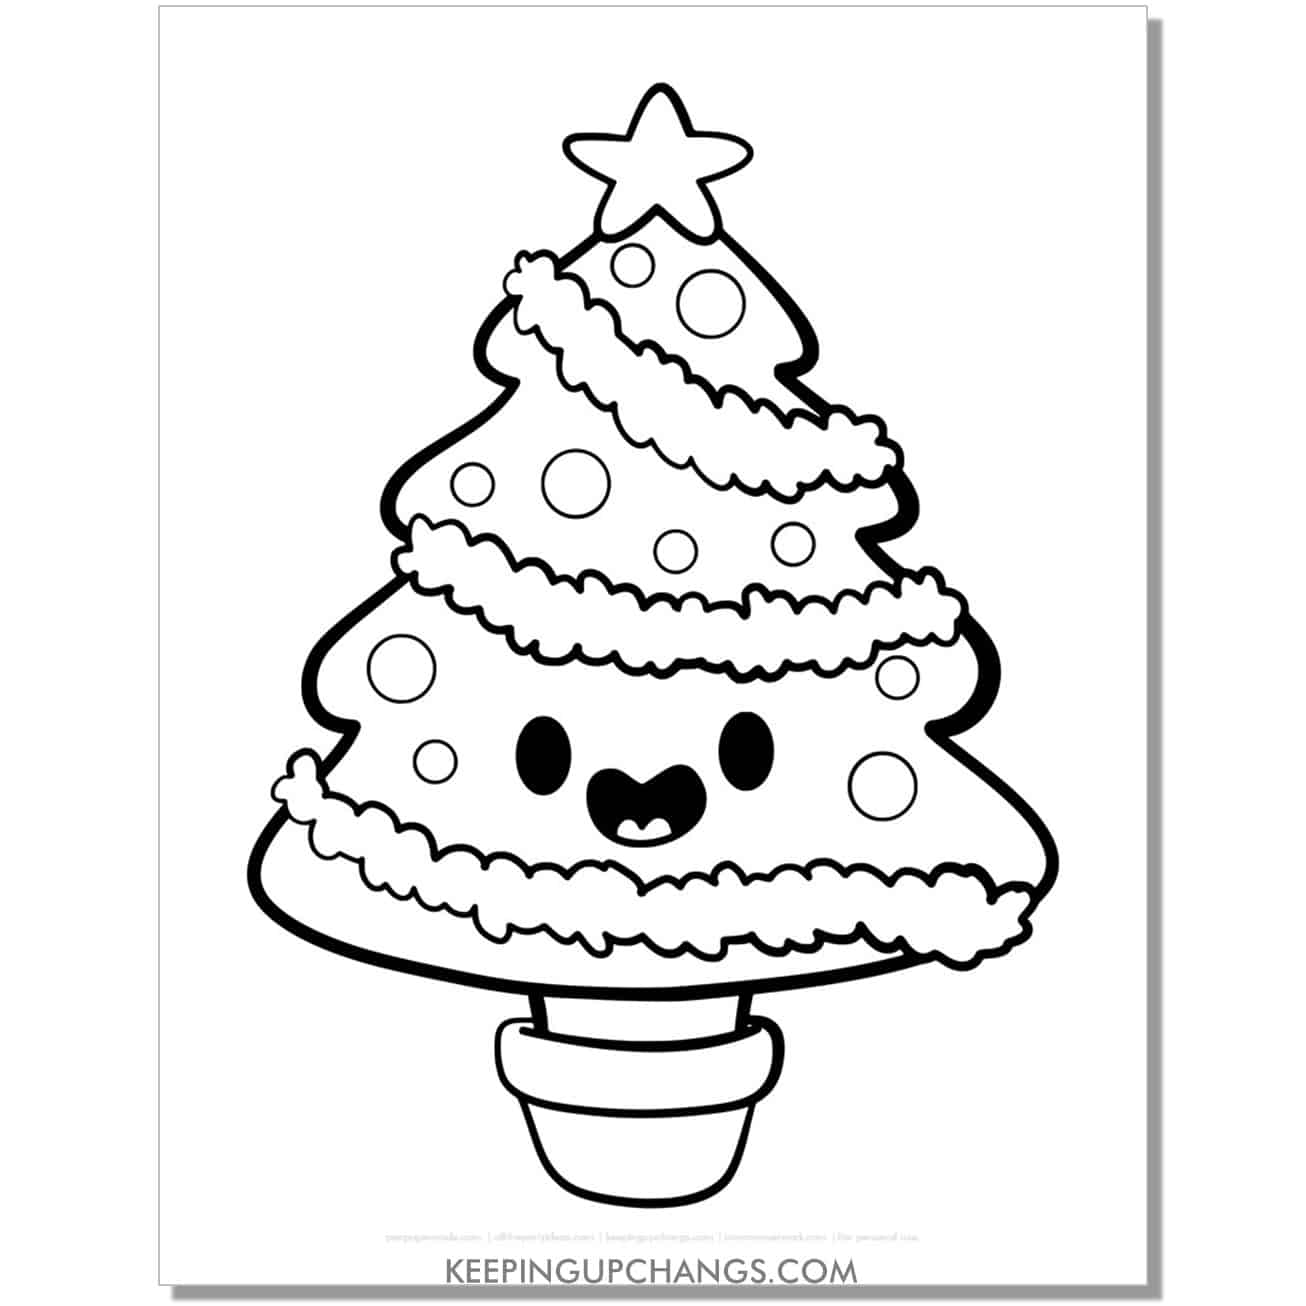 https://keepingupchangs.com/wp-content/uploads/free-adorable-emoji-christmas-tree-coloring-page-colouring-sheet.jpg